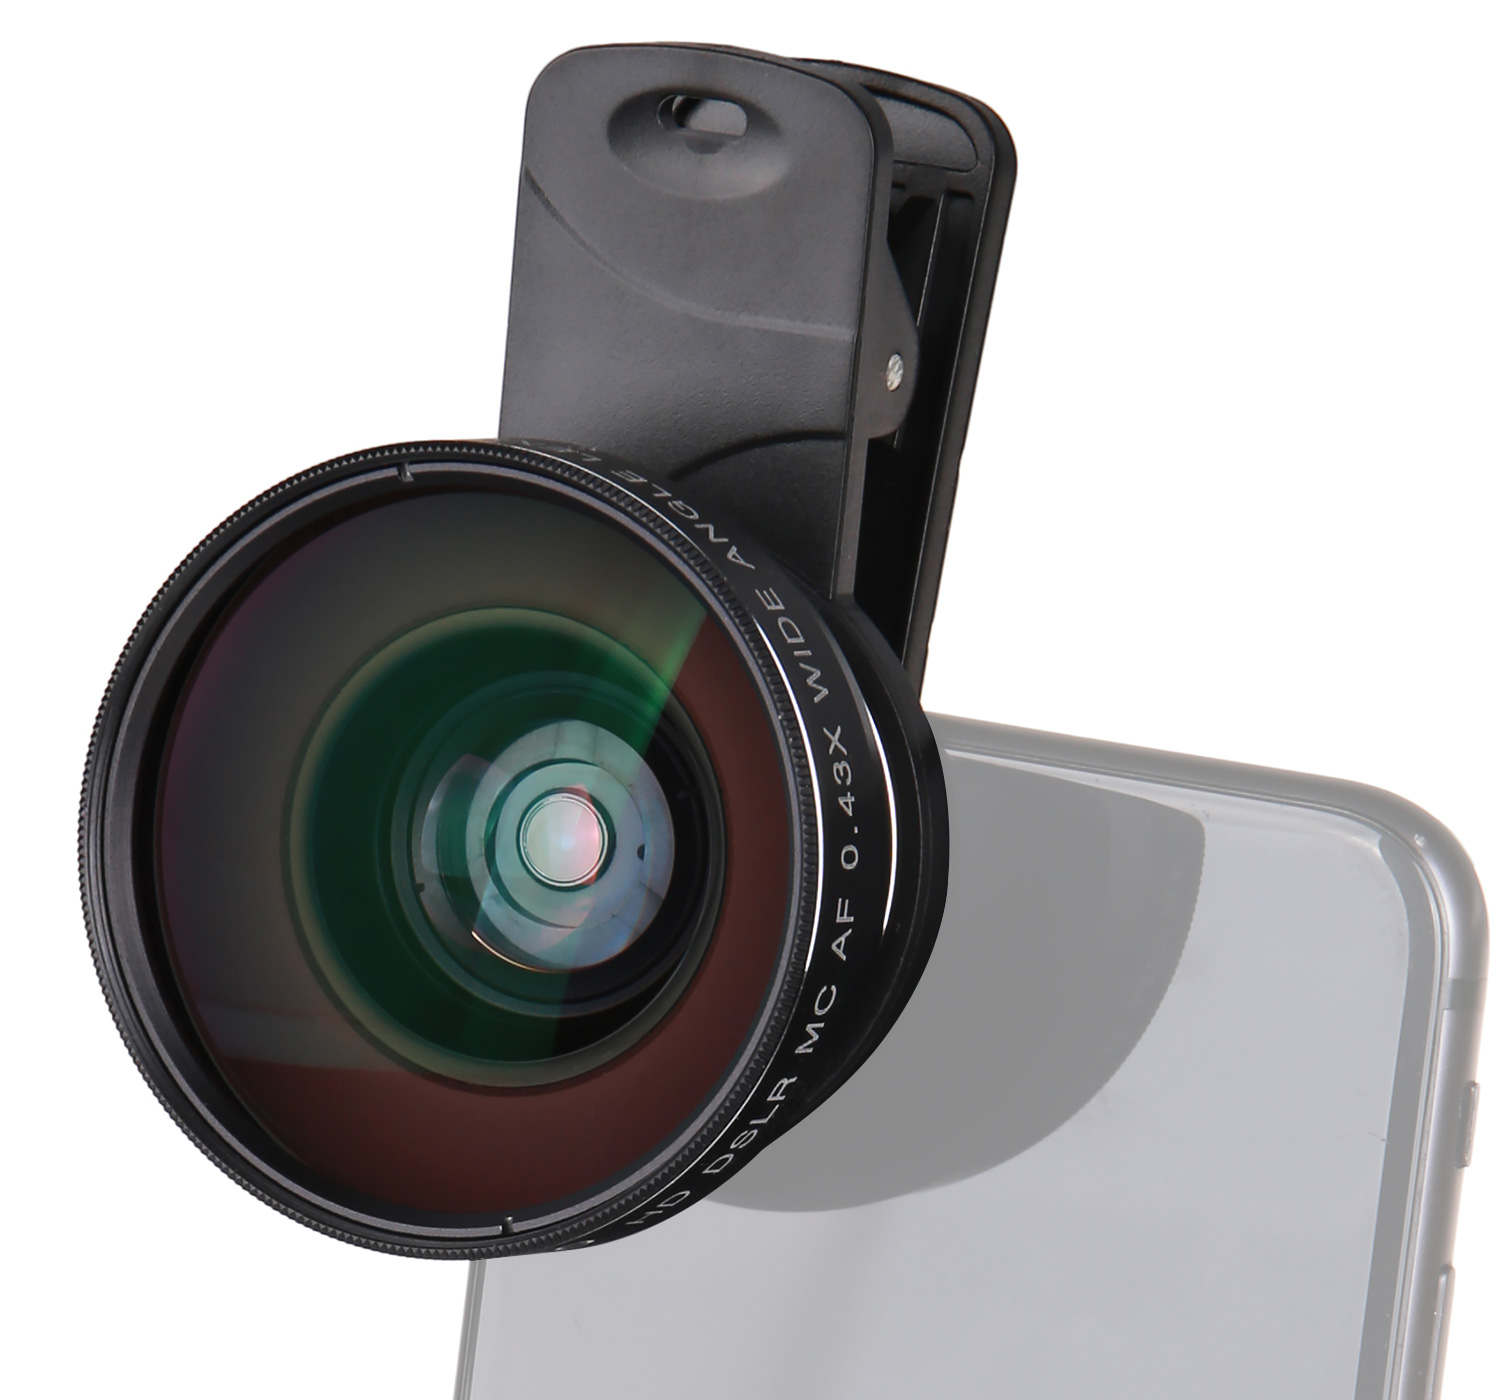 AYEX Smartphone Objektiv 0,43x Black Objektiv, Weitwinkel Makro-Linse Smartphone + 15x